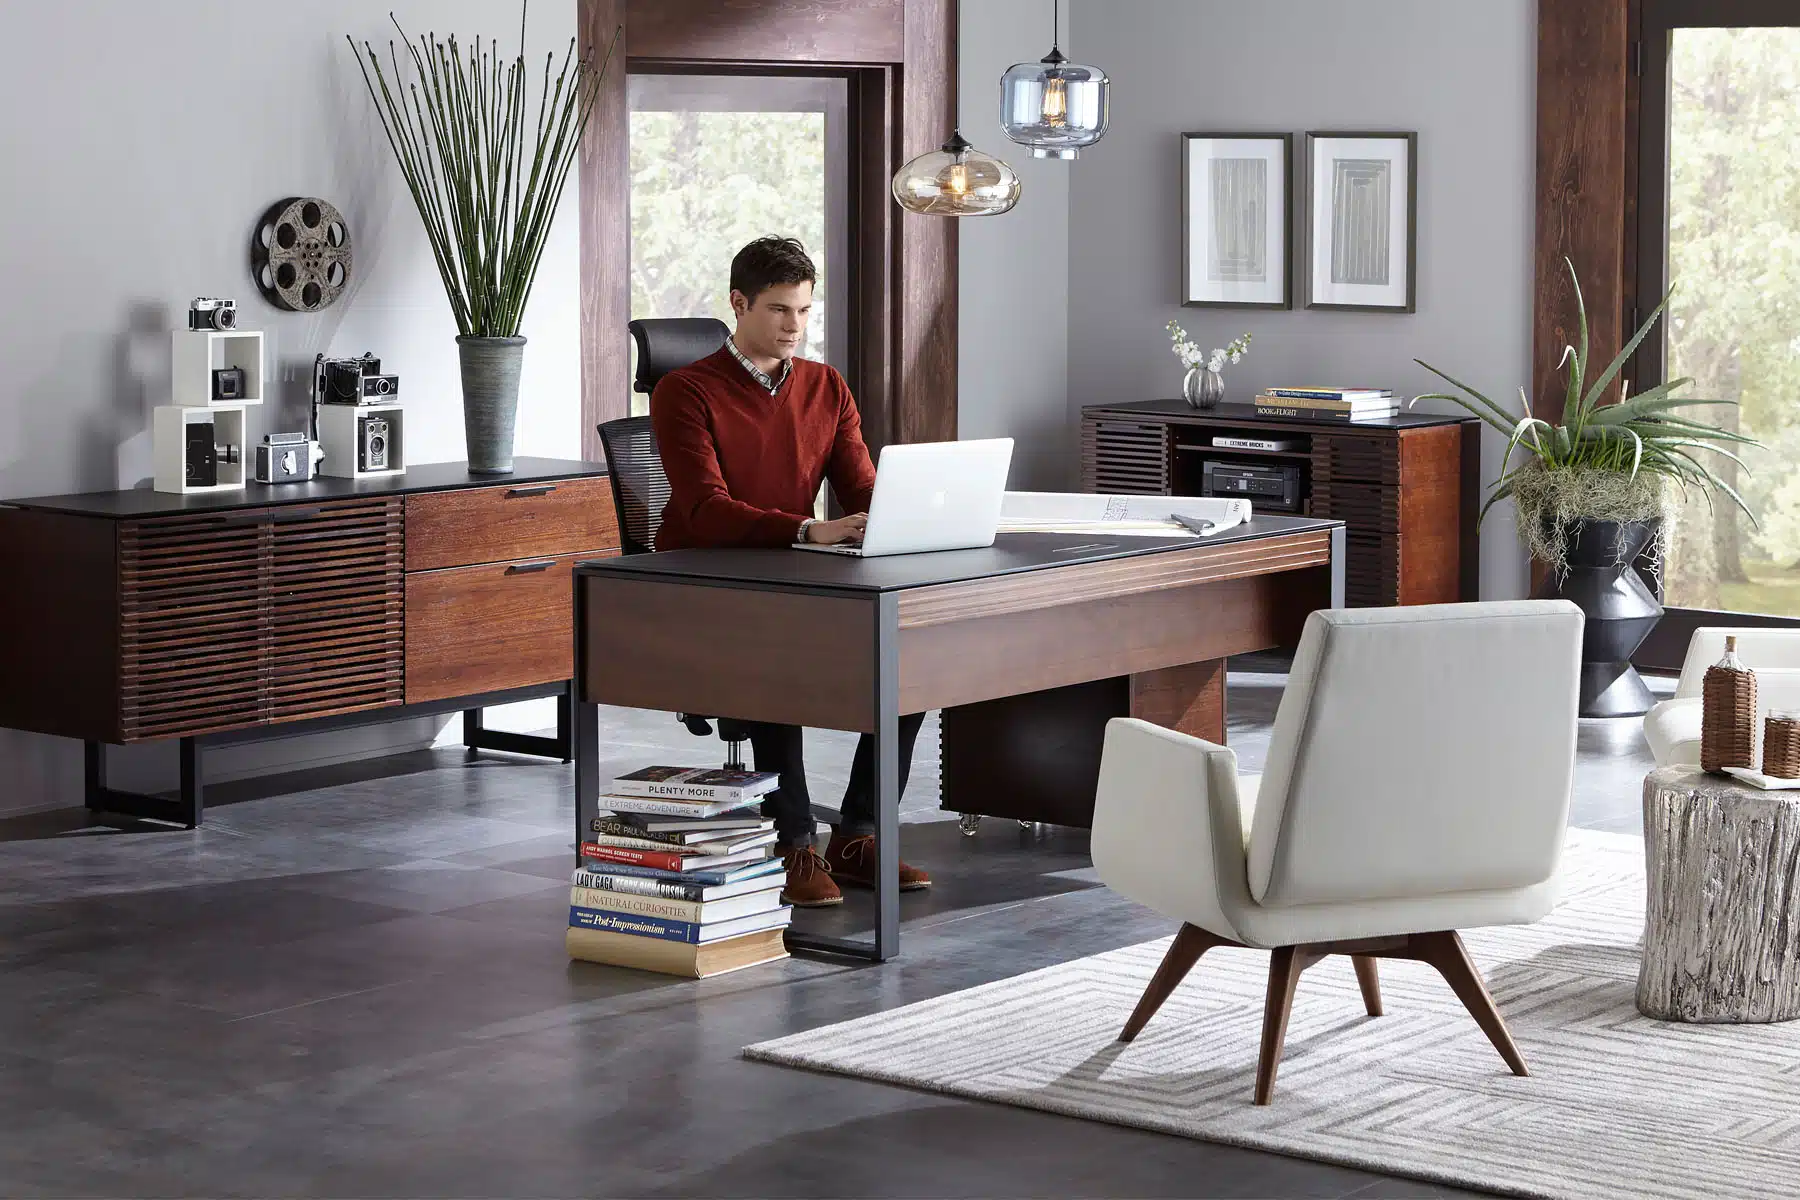 7 Modern Home Office Interior Design Tips | San Francisco Design